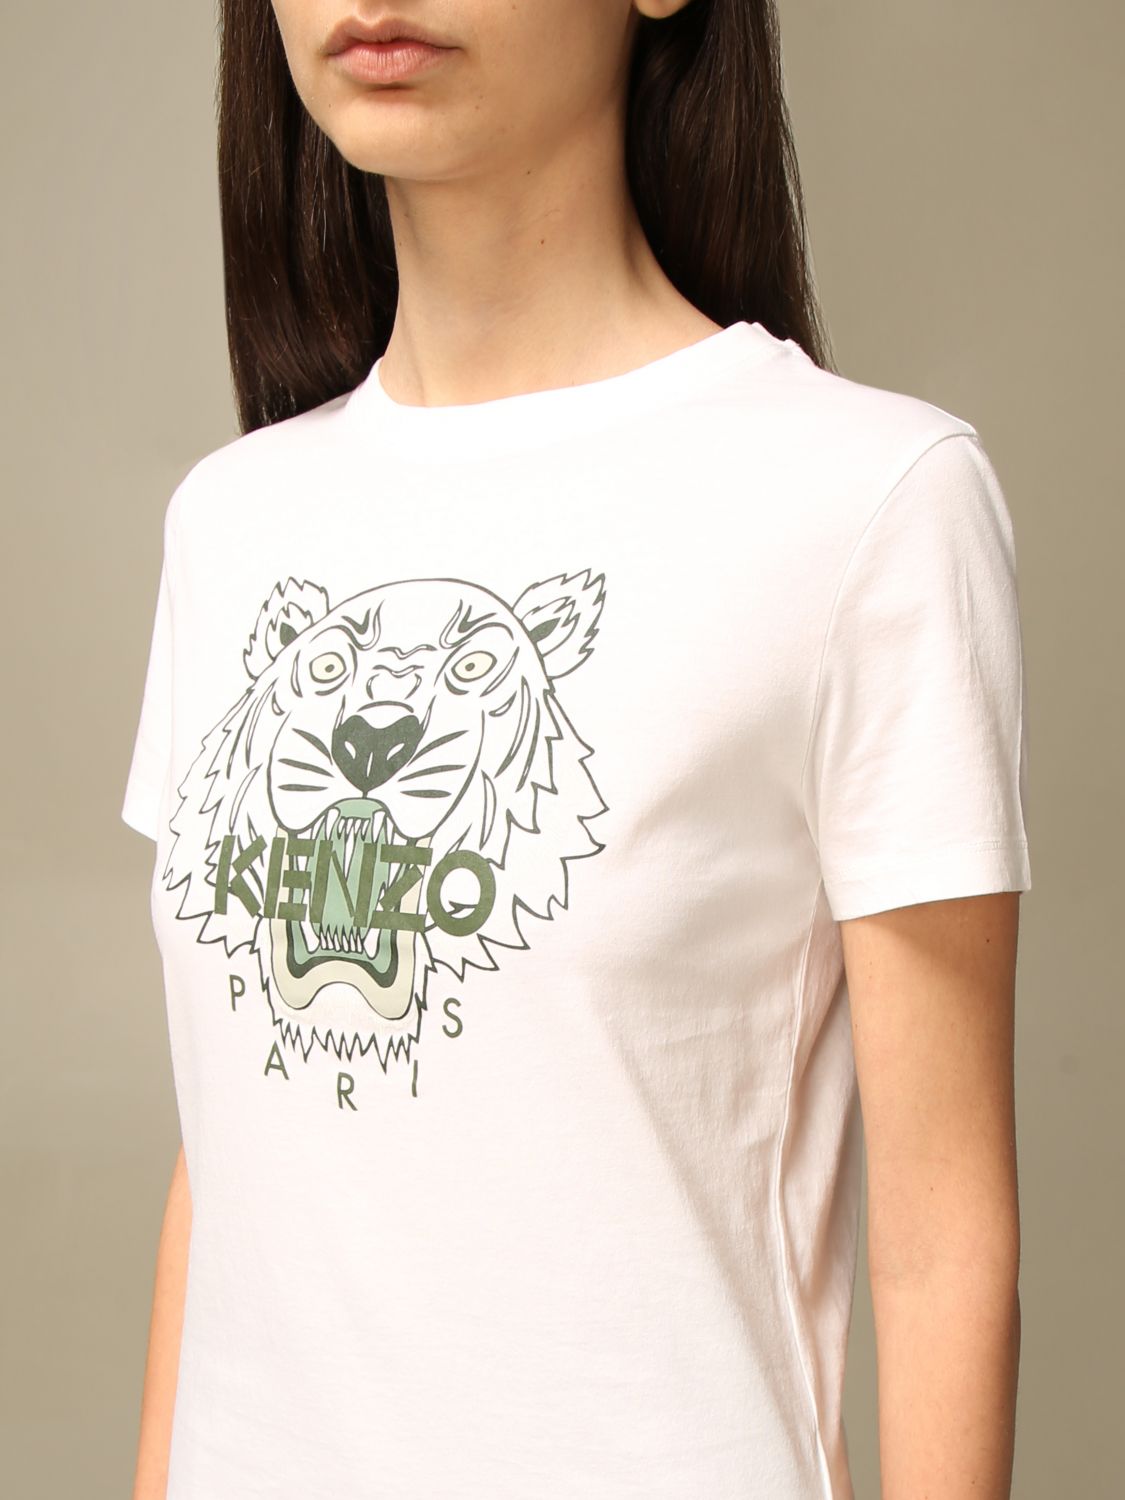 Camiseta Kenzo Flash Sales deportesinc.com 1688486637